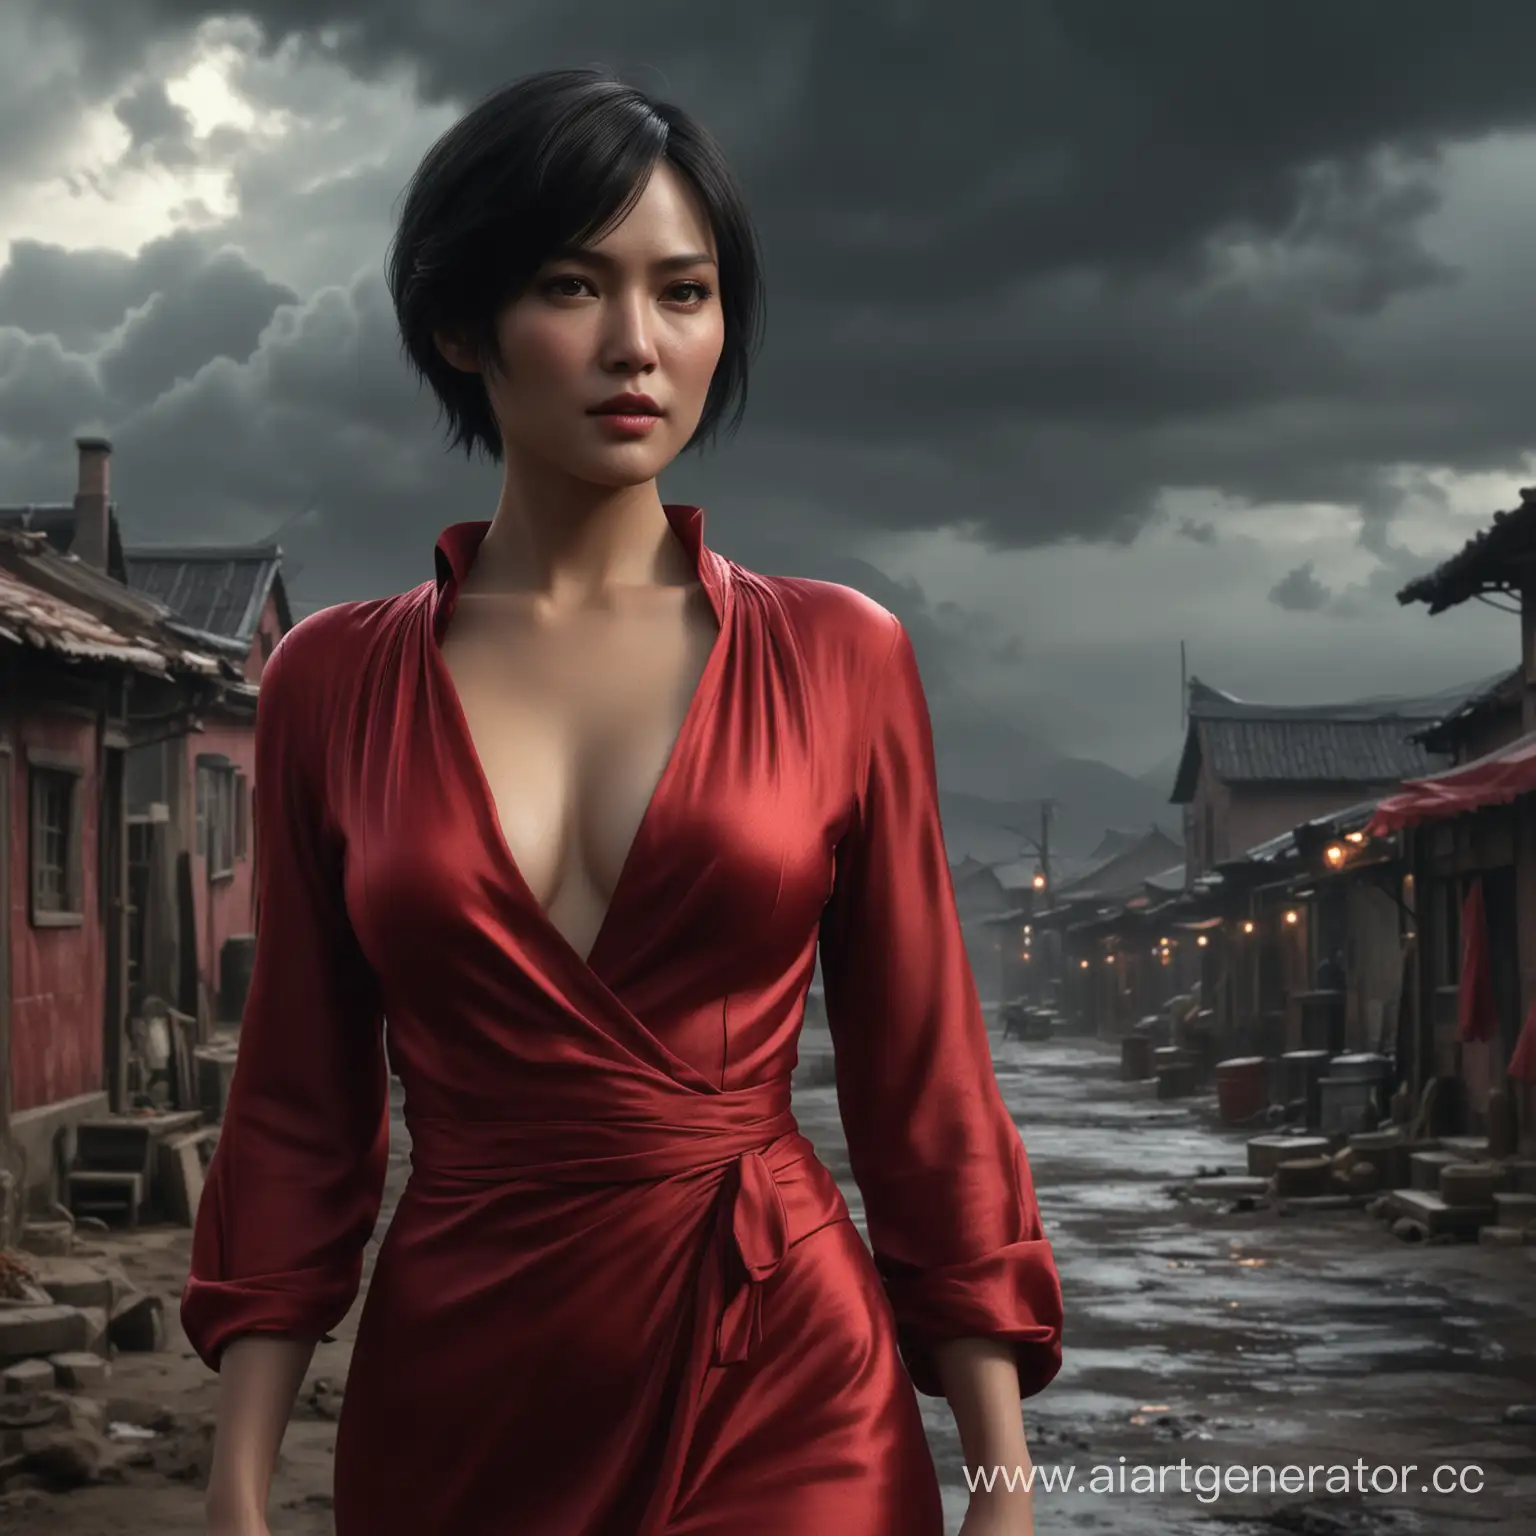 Ada-Wong-Standing-in-Red-Silk-Dress-in-Desolate-Village